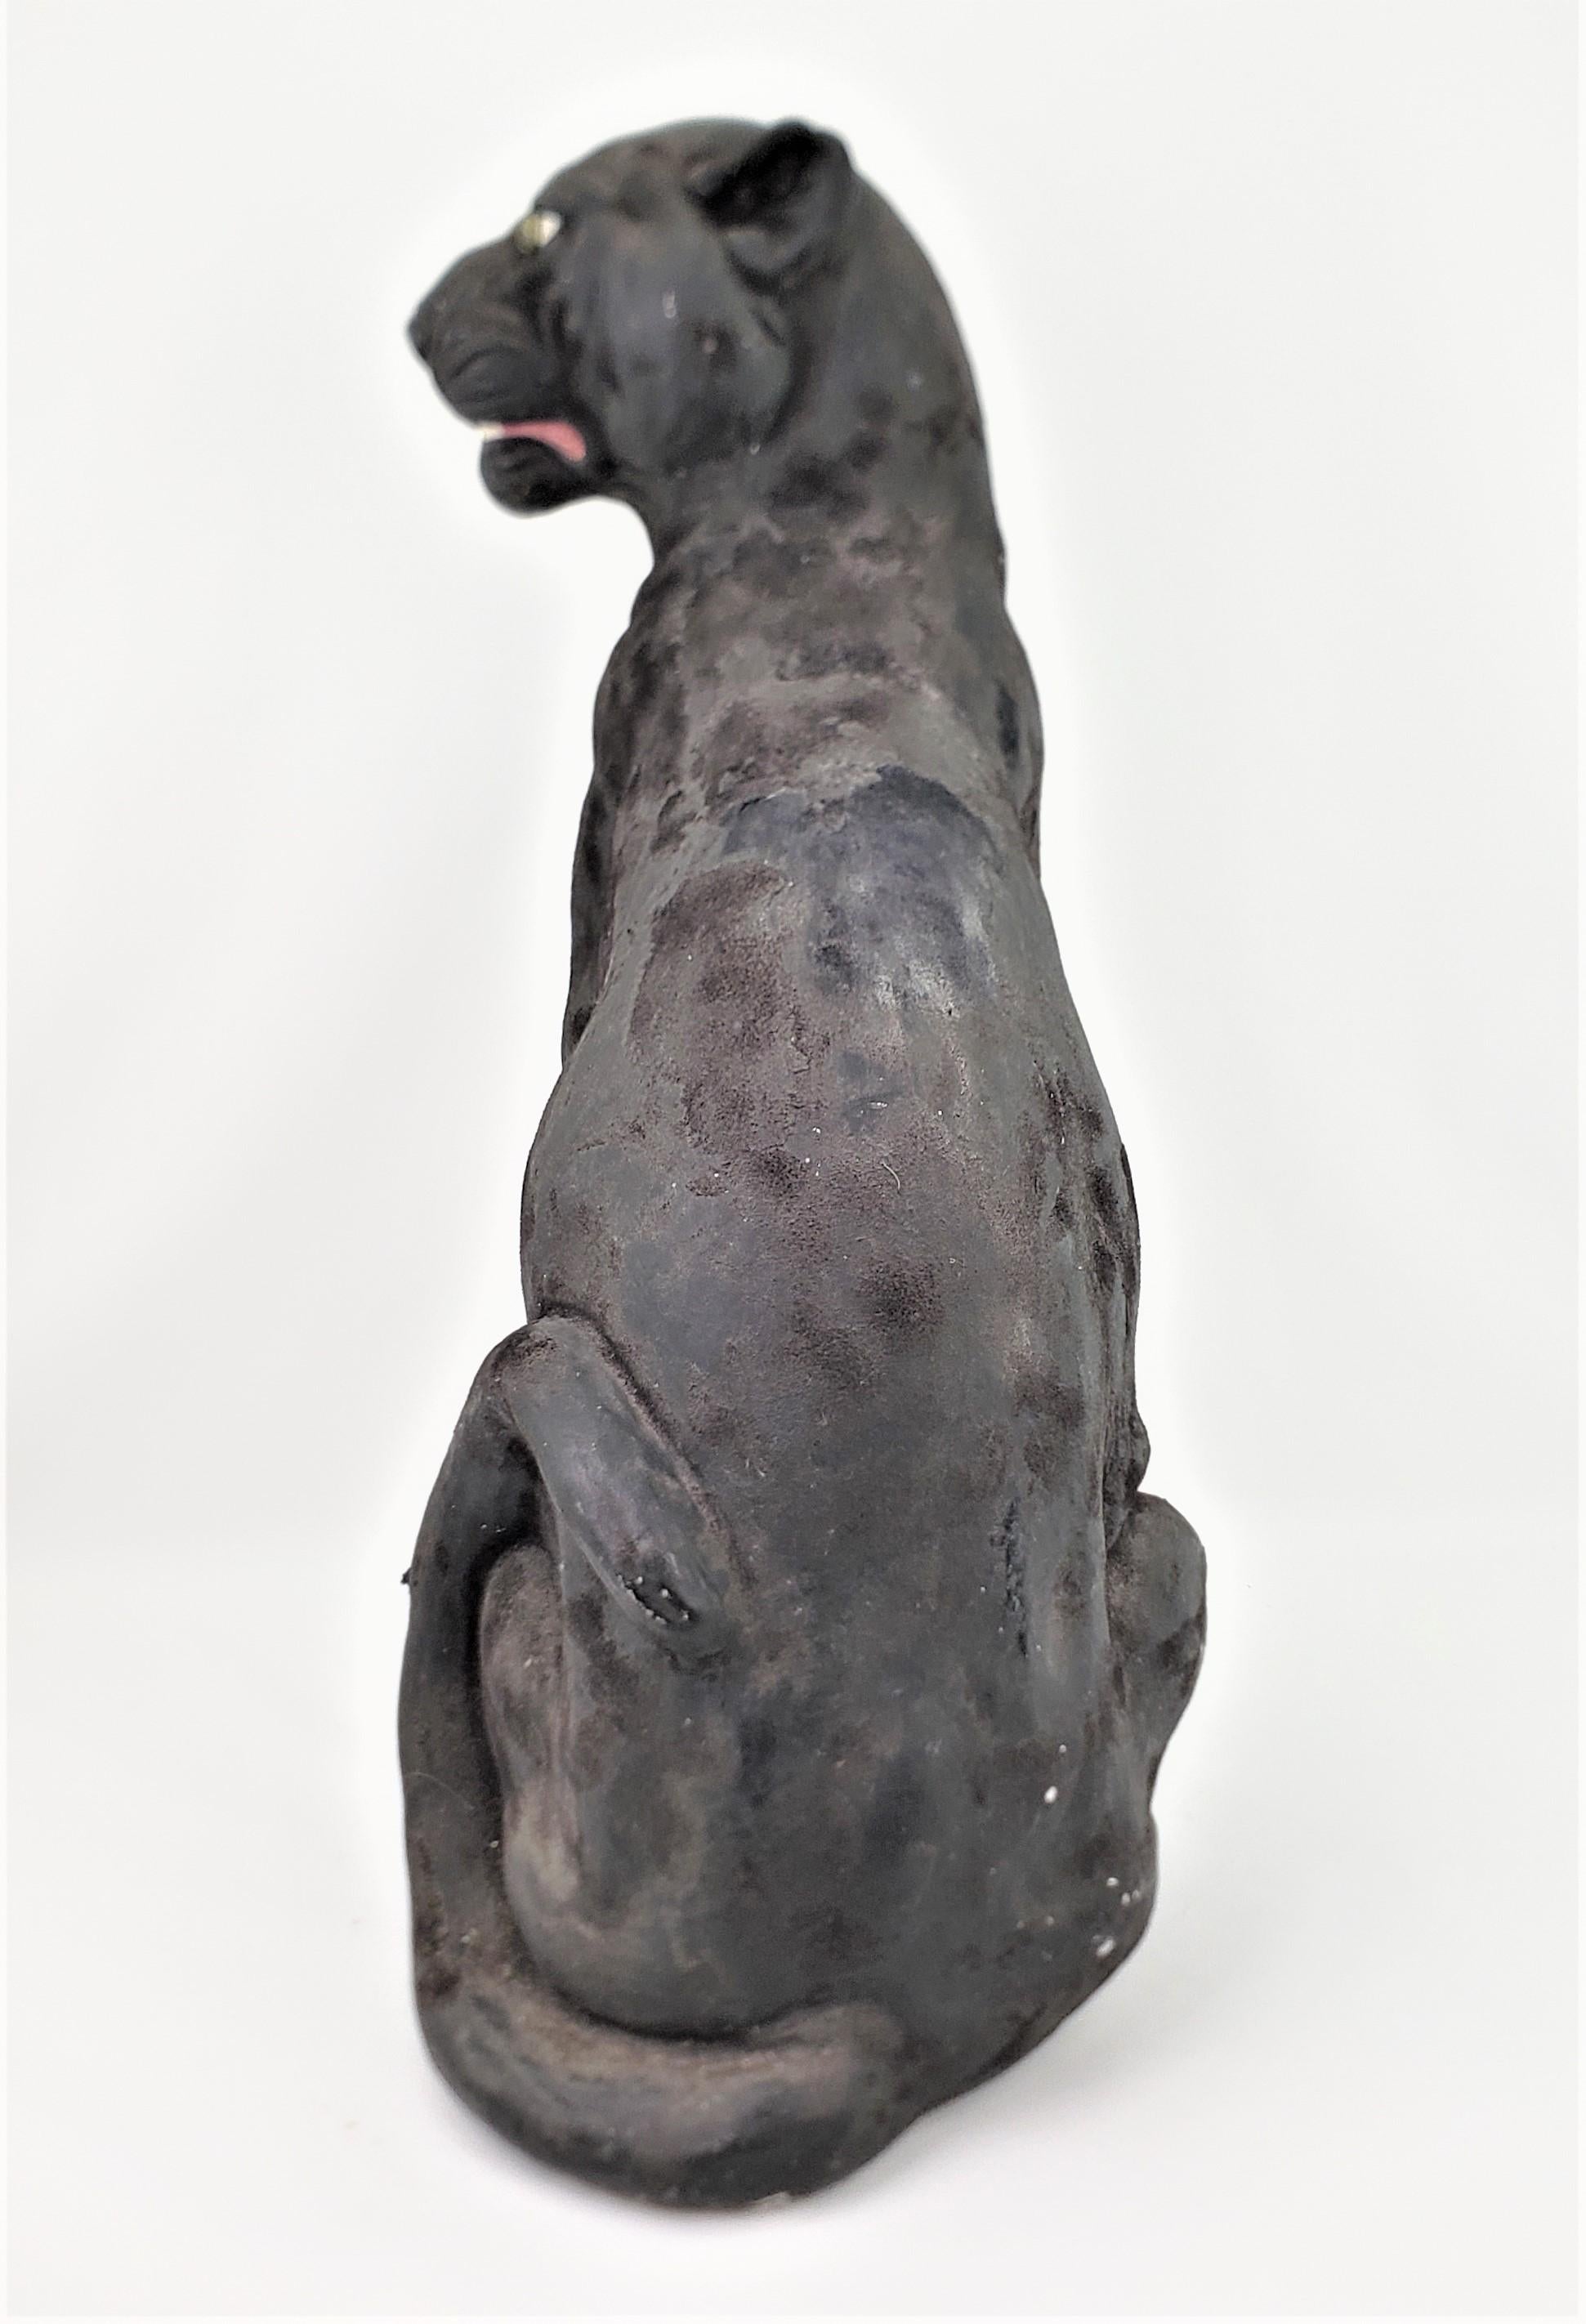 black panther dog for sale